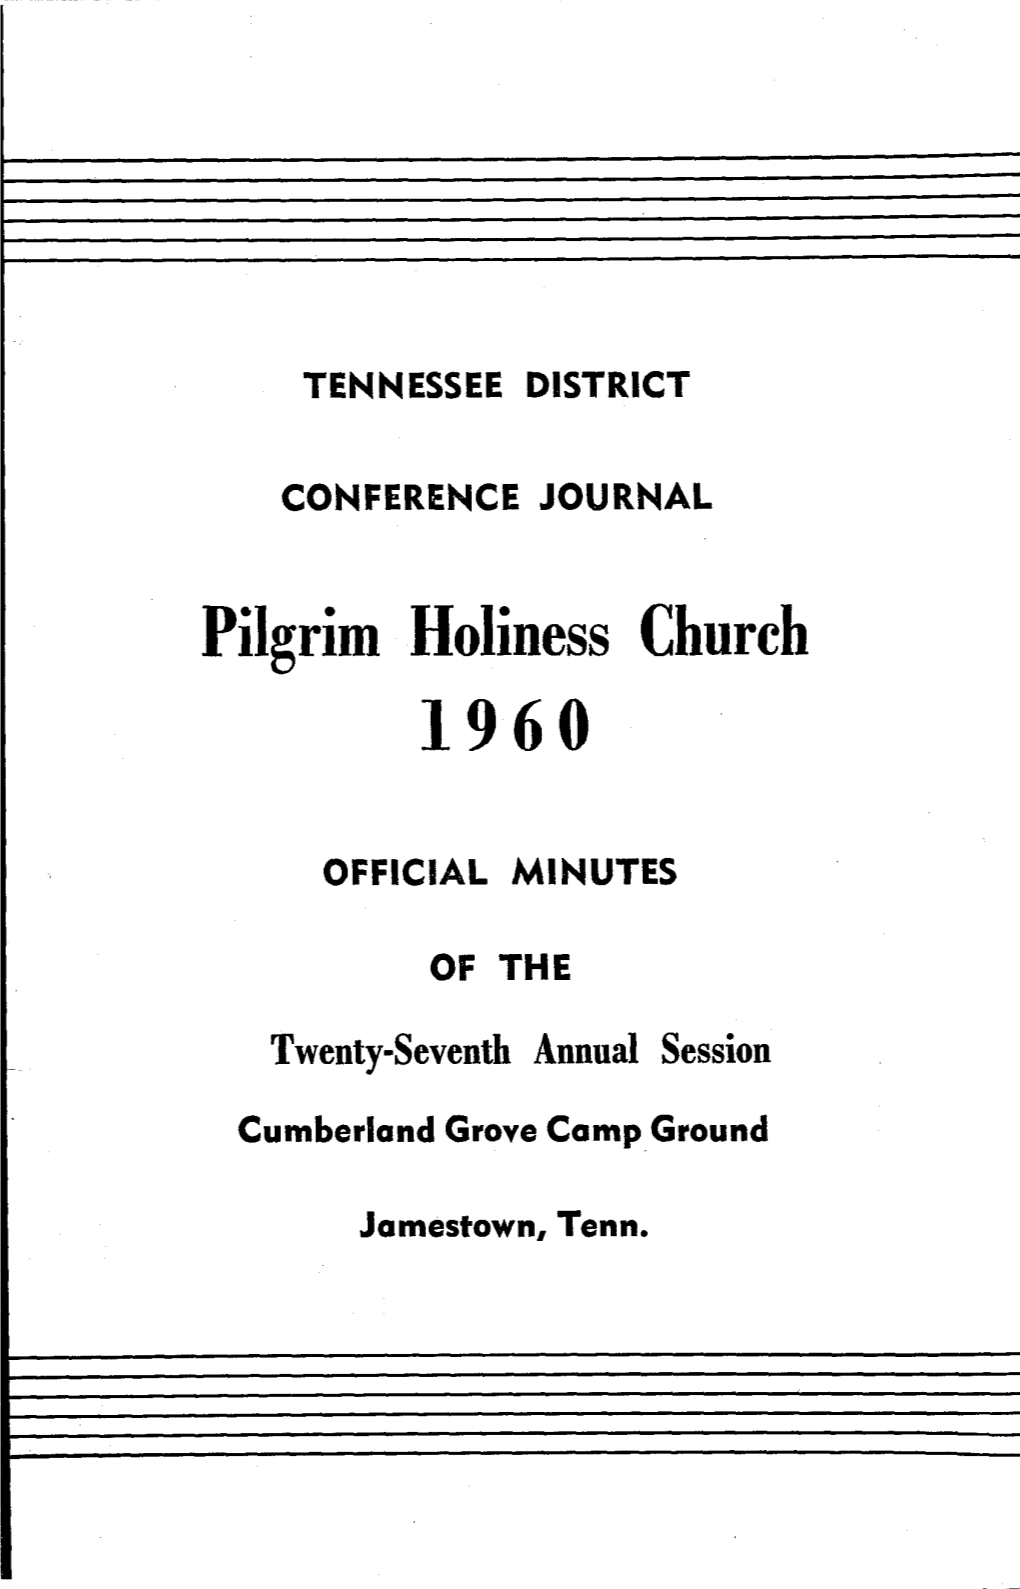 Pilgrim Holiness Church 1960